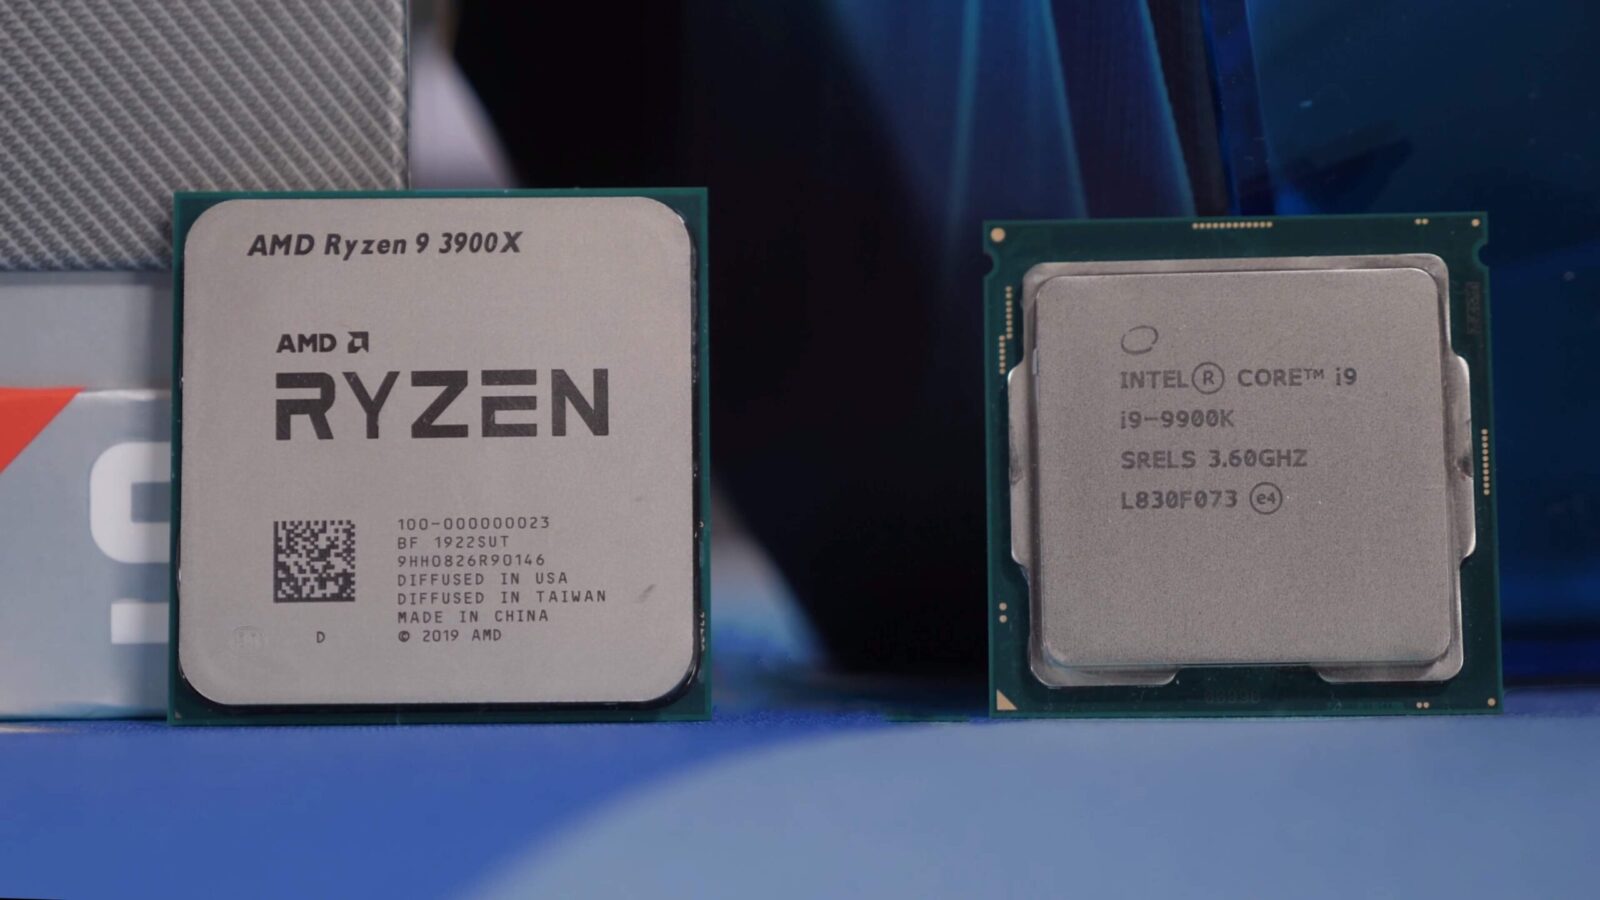 Ryzen 9 3900X vs Core i9 9900K